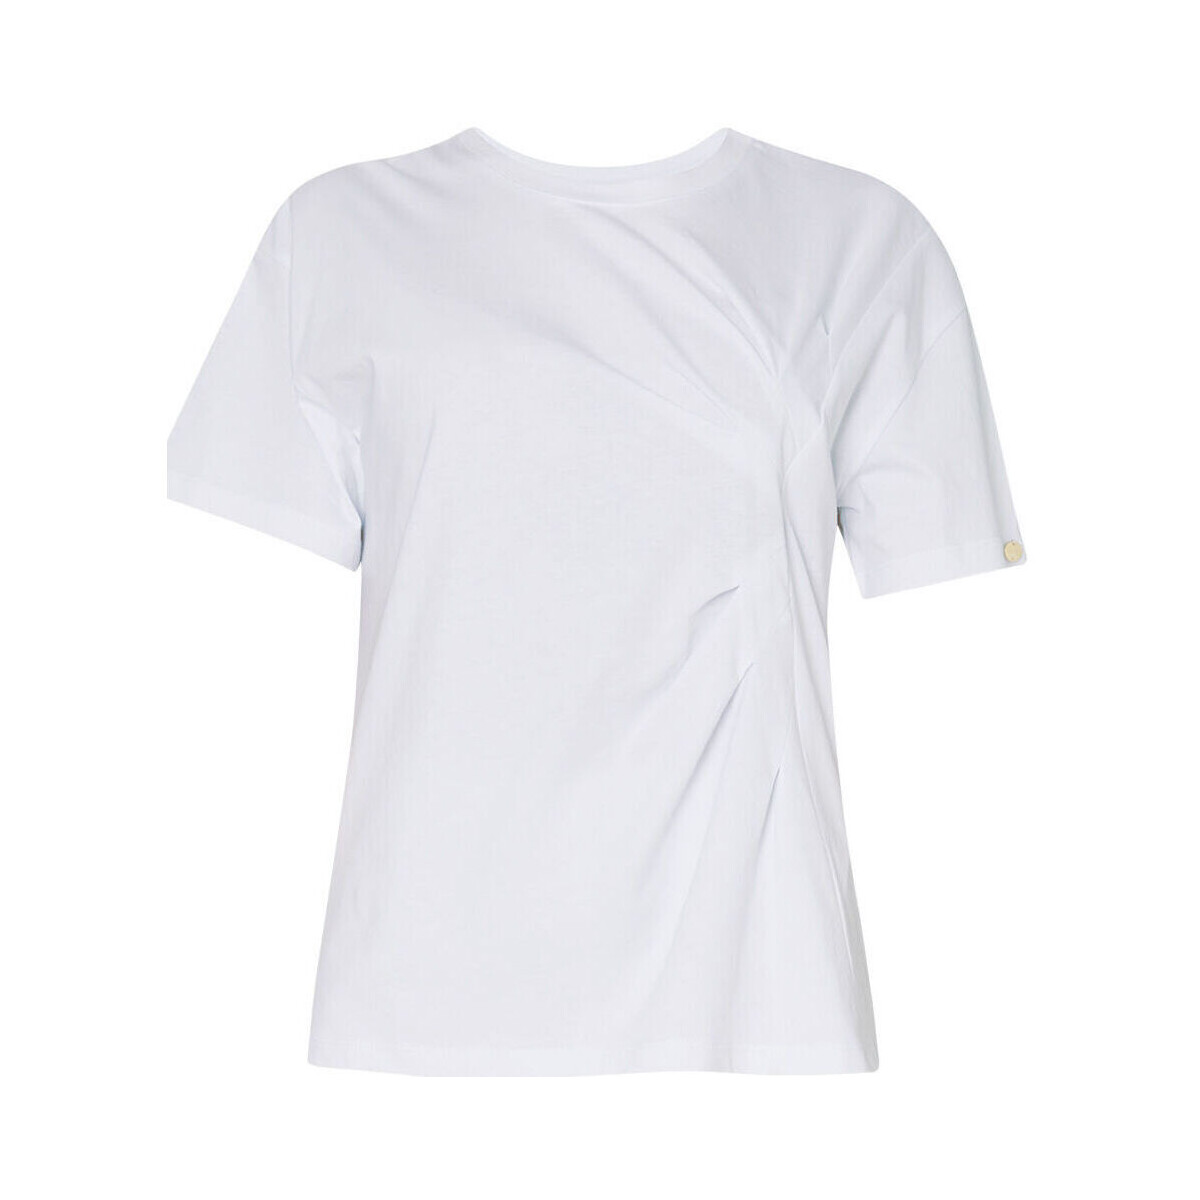 Vêtements Femme Farah Jim Sweatshirt Herren in Marineblau meliert mit kurzem Reißverschluss aus Bio-Baumwolle Liu Jo T-shirt Herren avec fronces asymétriques Blanc